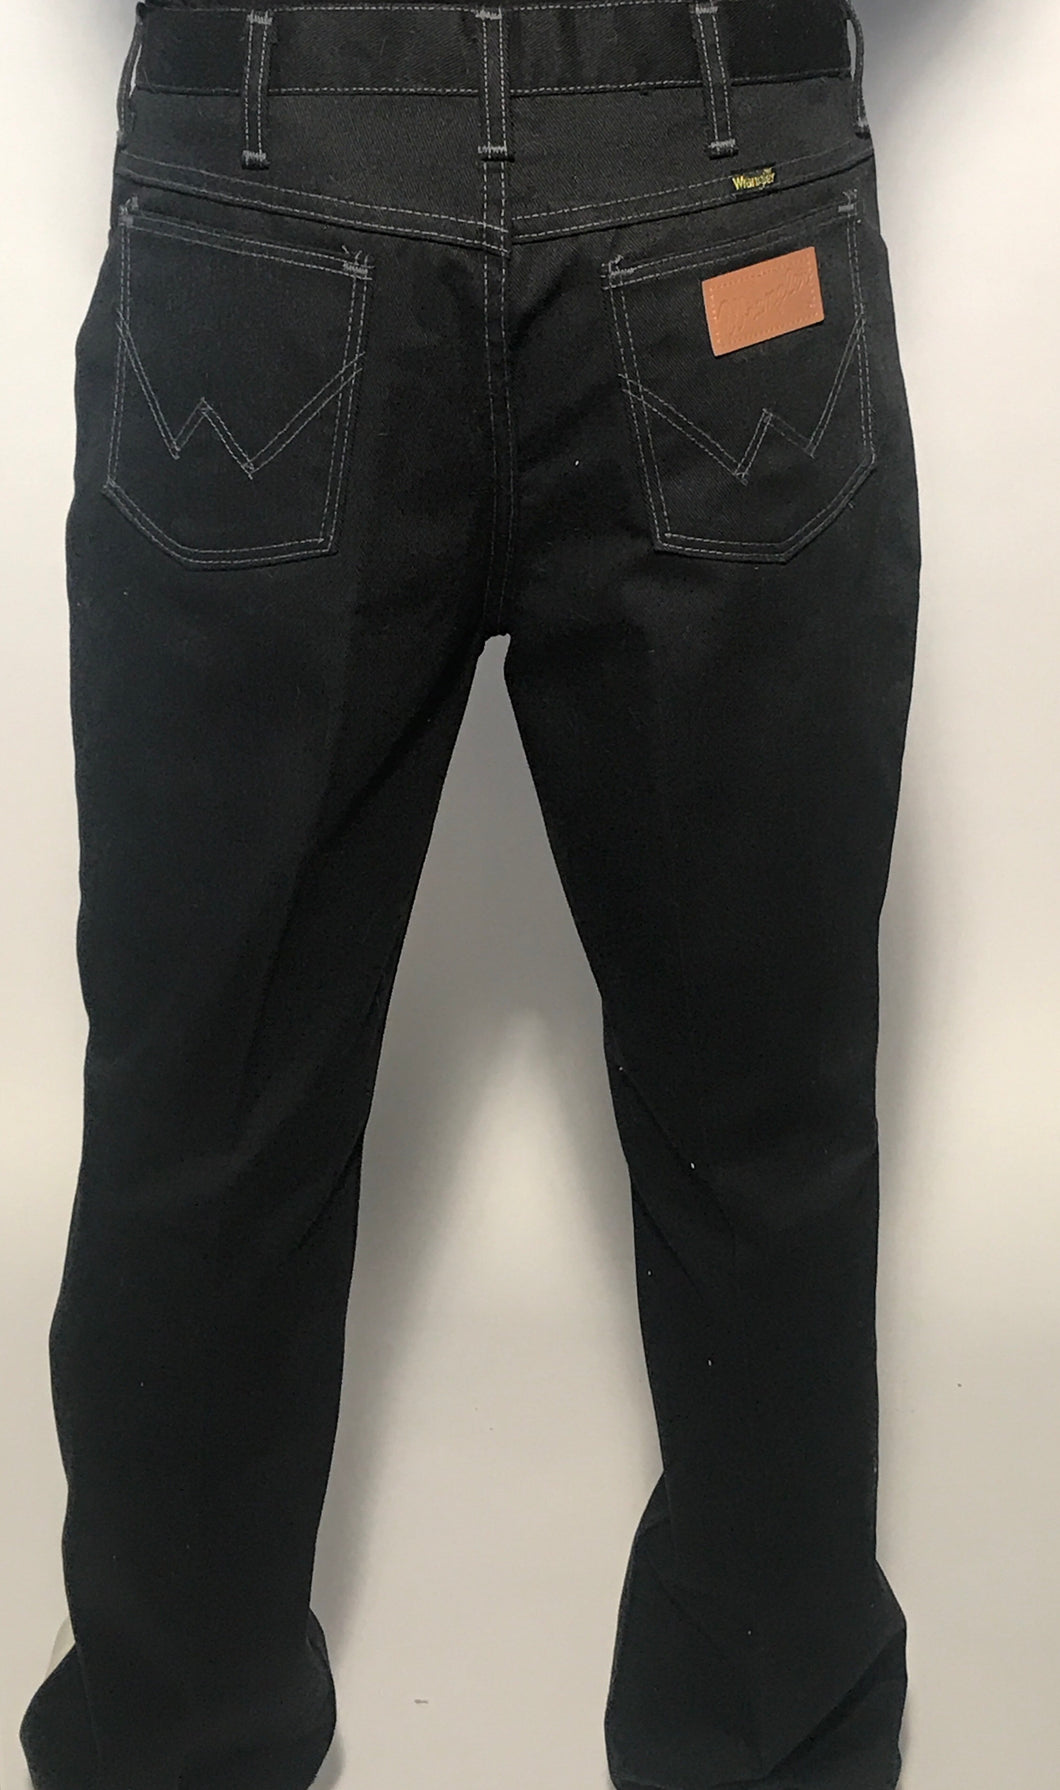 Vintage Men's Black Wrangler Pants Size 33